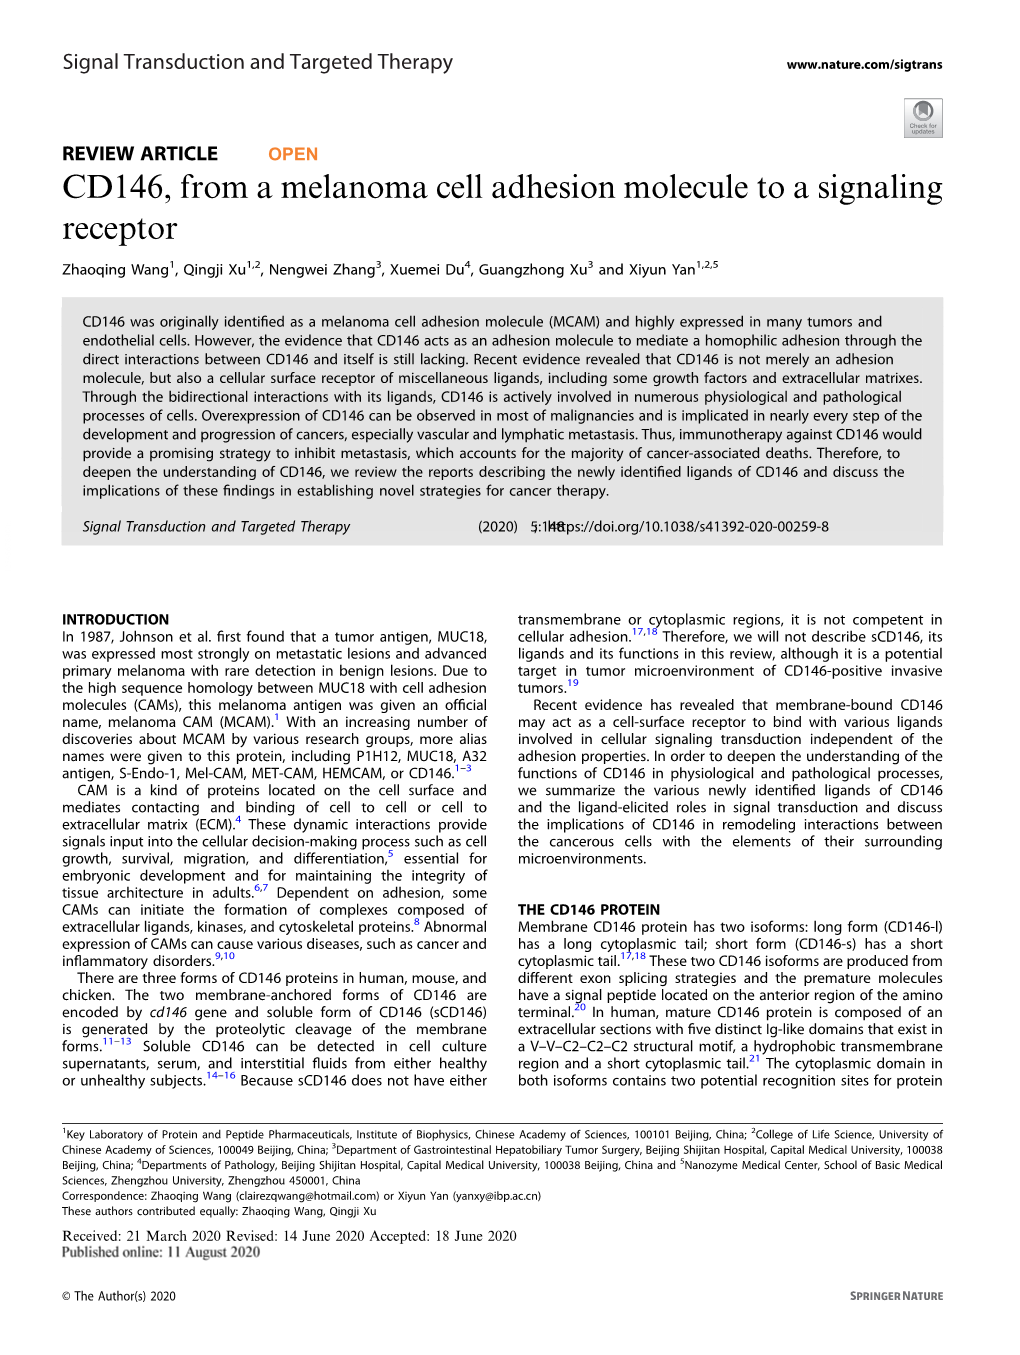 CD146, from a Melanoma Cell Adhesion Molecule to a Signaling Receptor